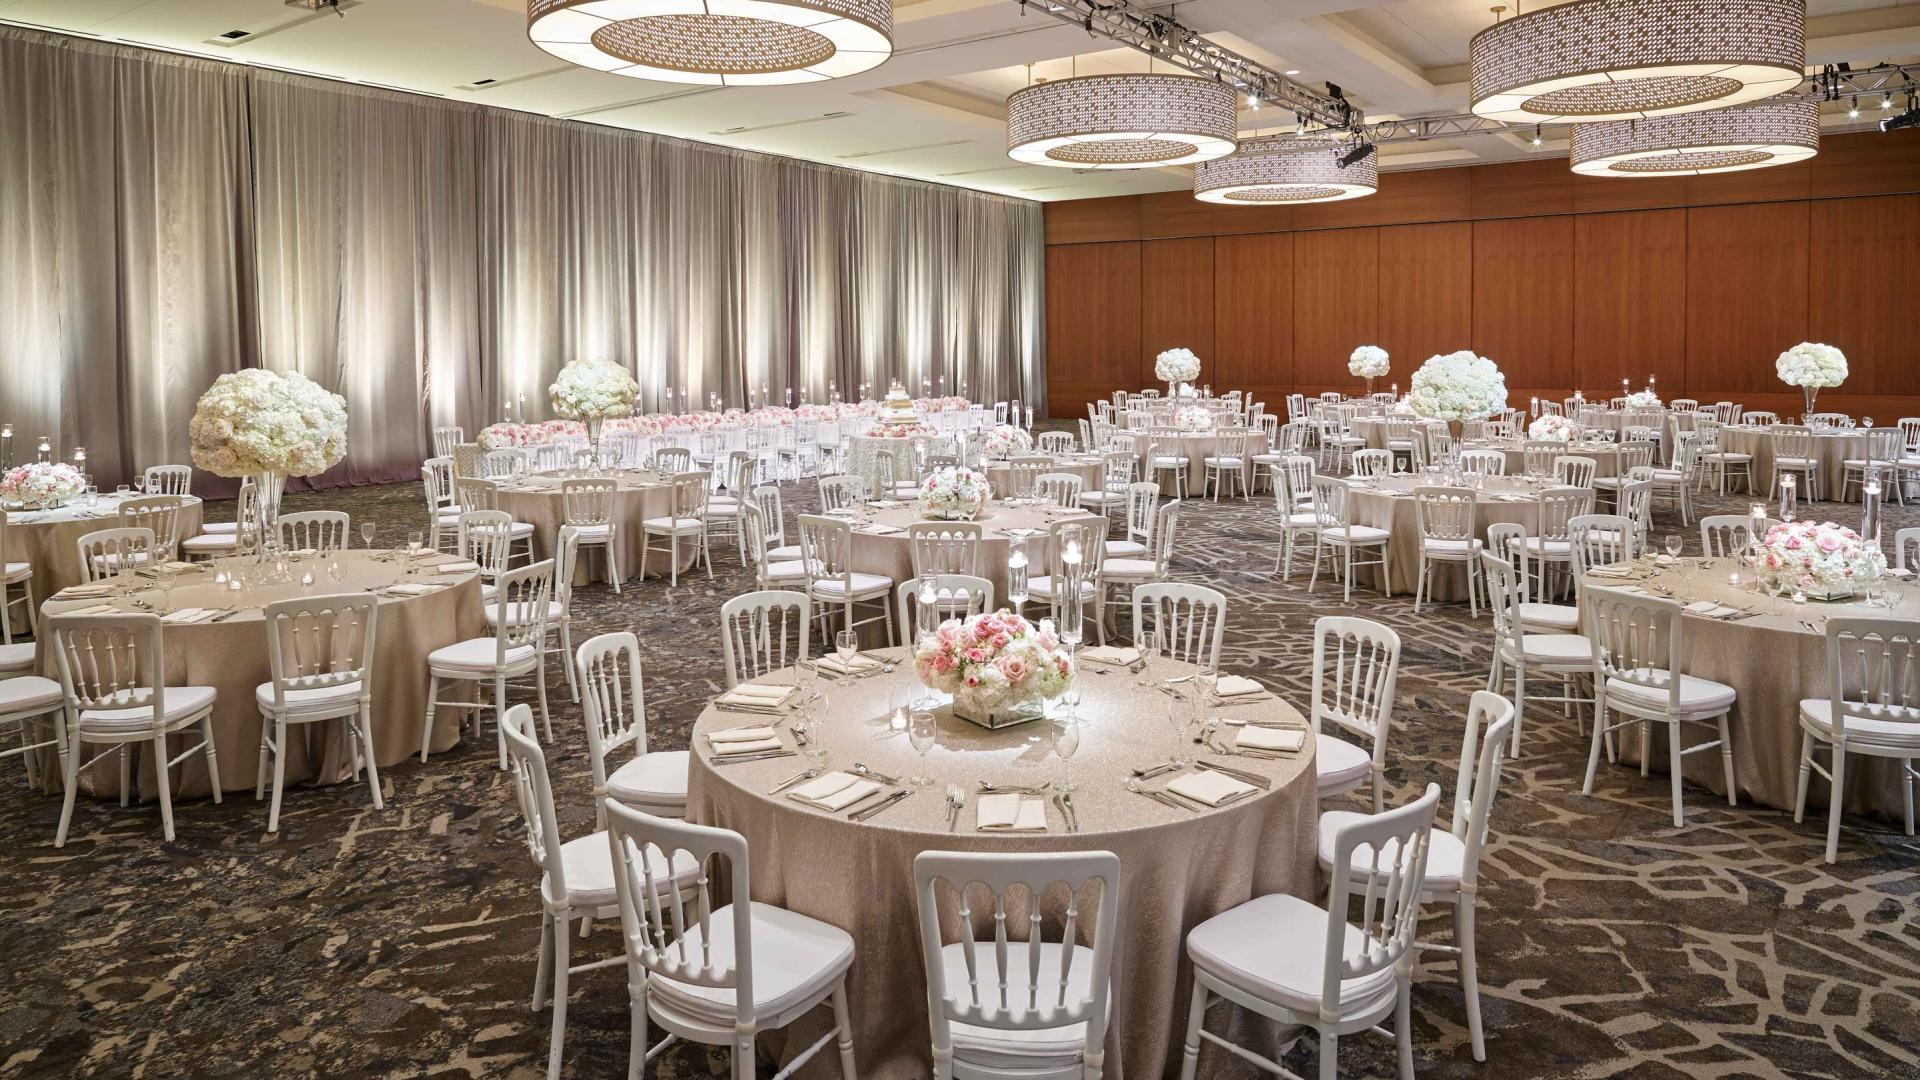 Banquet Halls for Rent in Dallas, TX